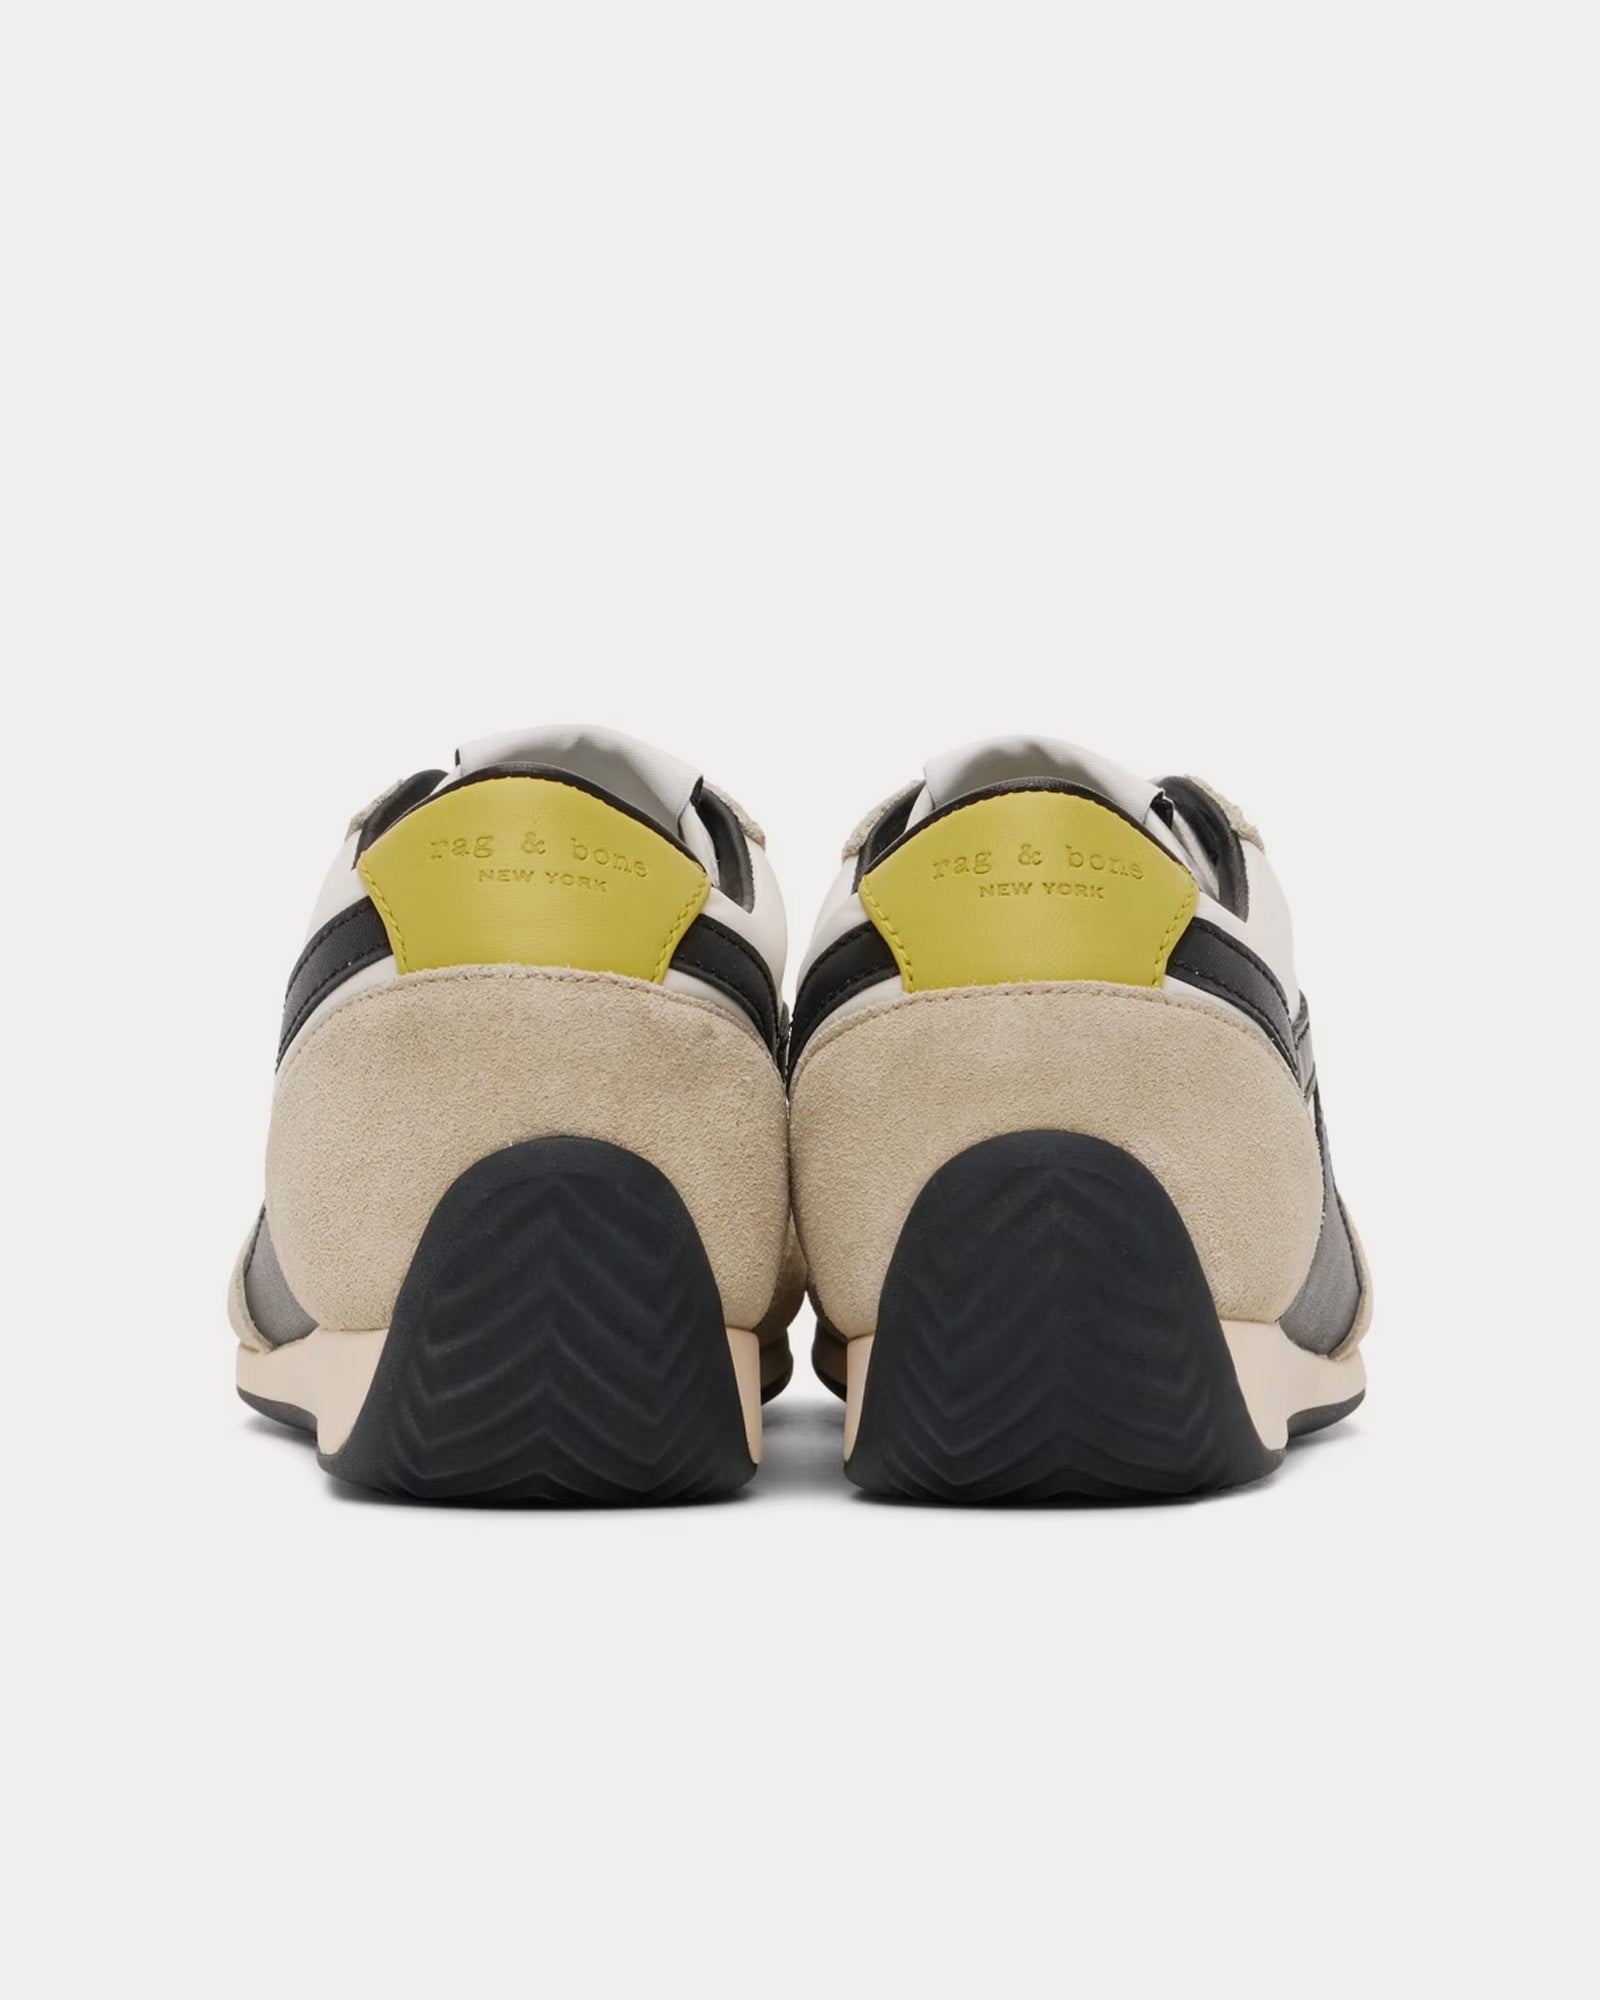 Rag & Bone - Retro Runner Slim Nylon White / Black / Yellow Low Top Sneakers